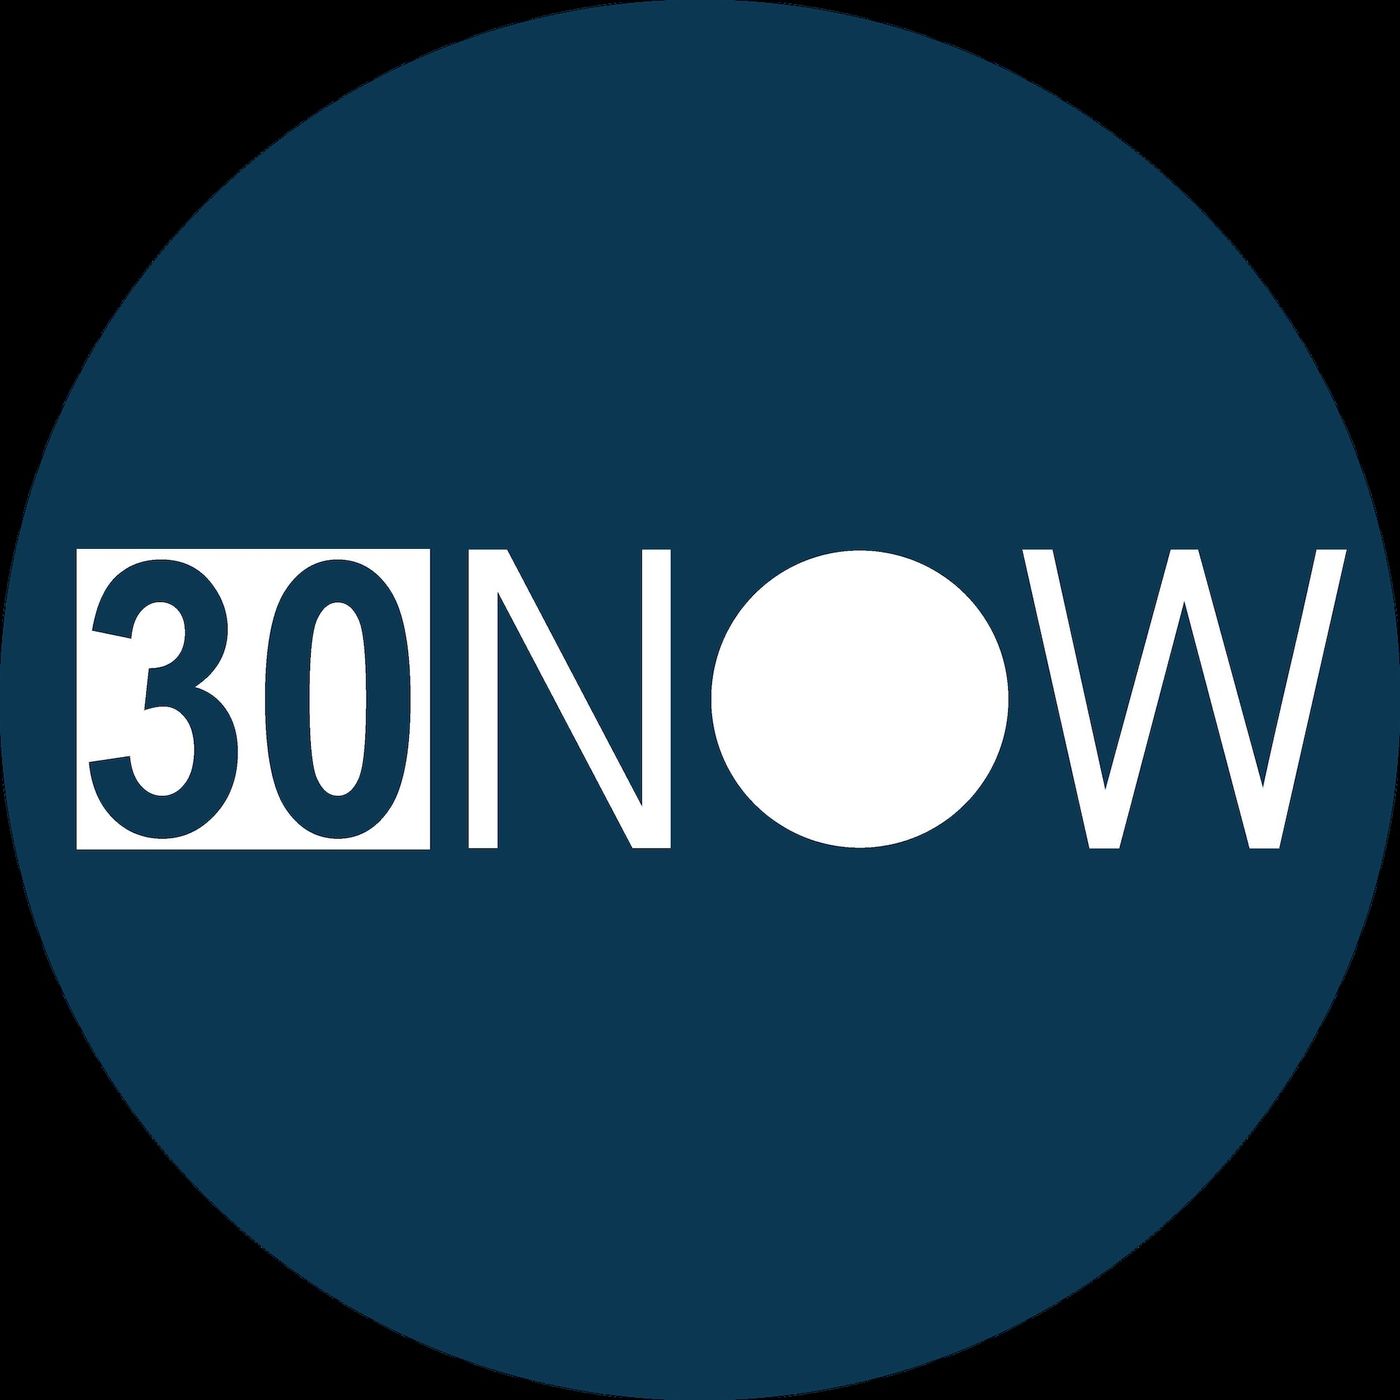 30NOW logo